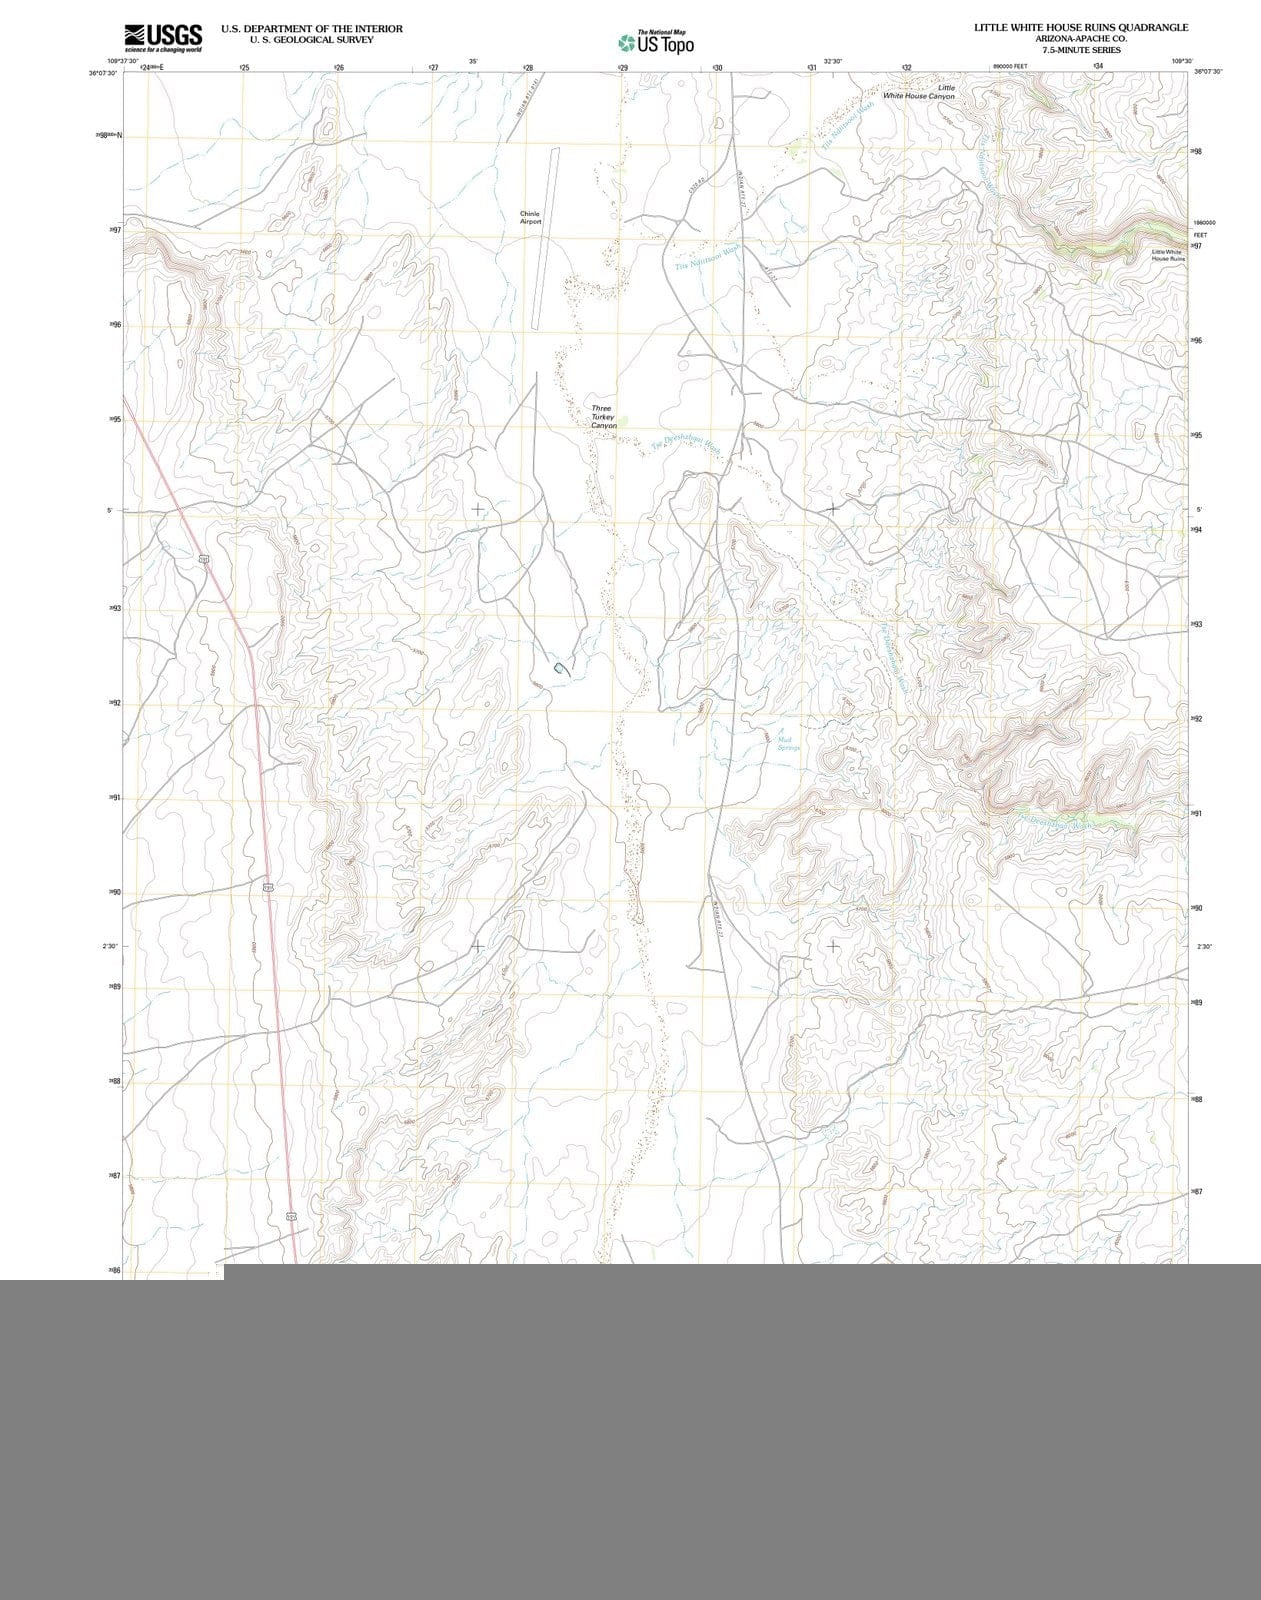 2011 Mud Spring, AZ - Arizona - USGS Topographic Map